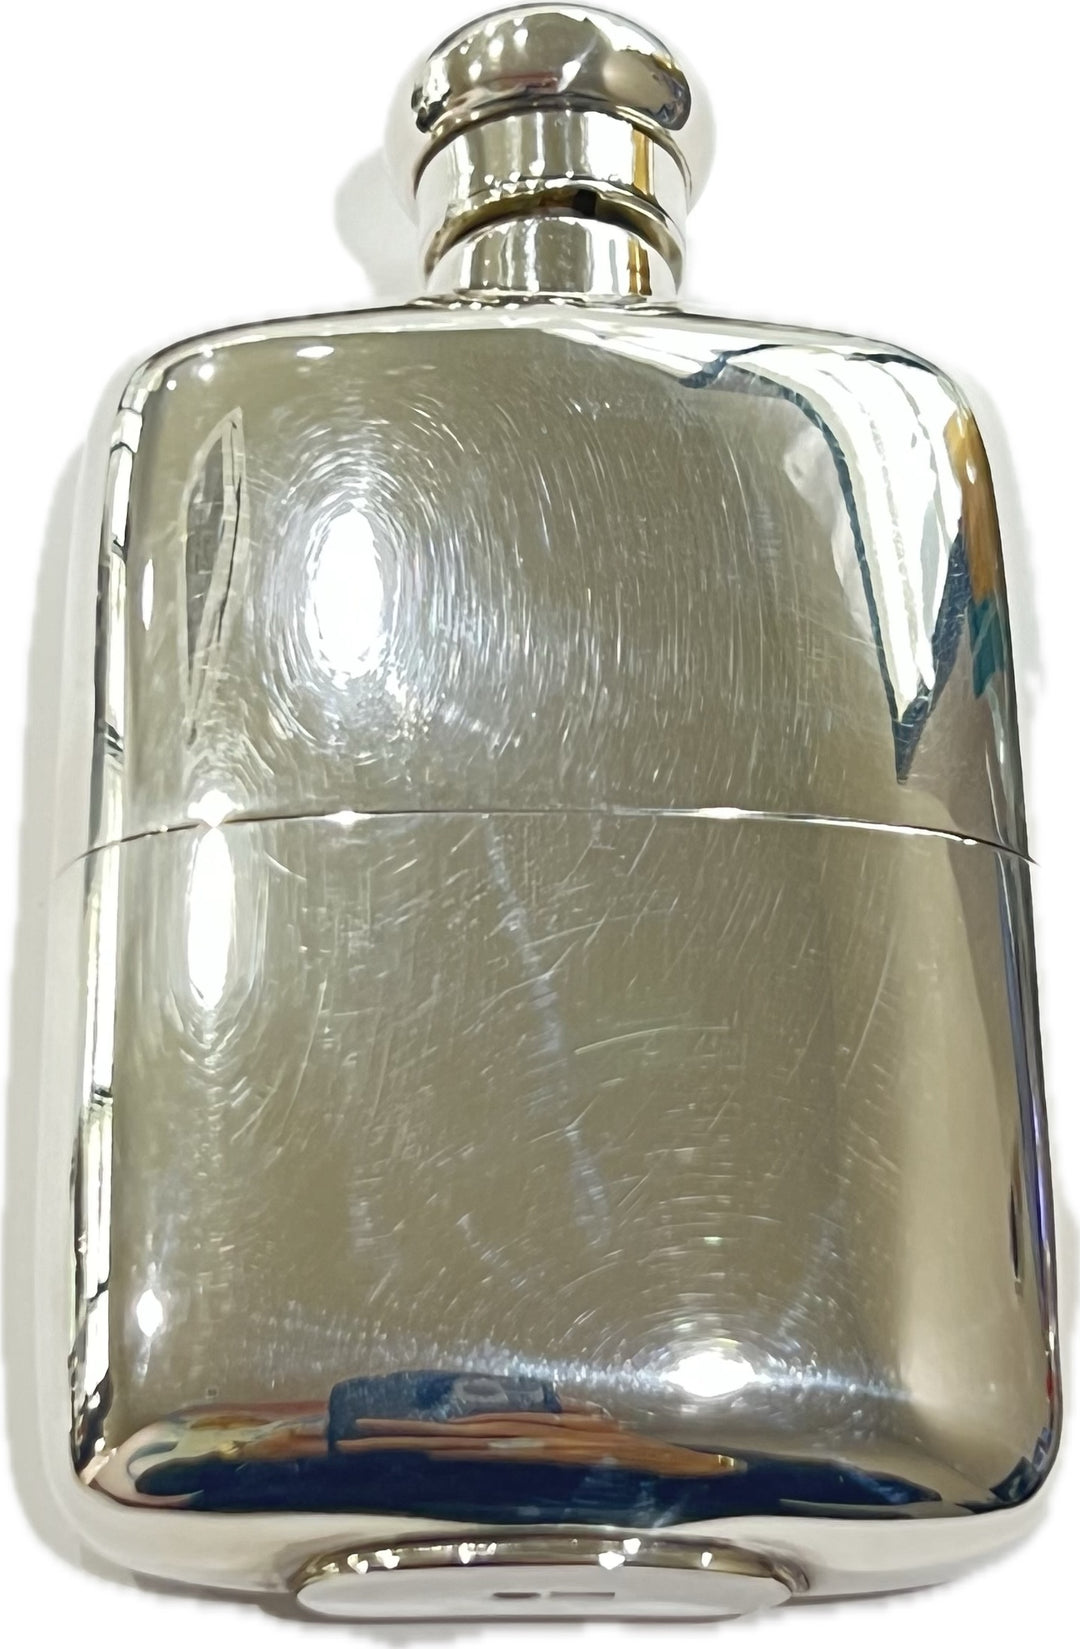 Goretta fiaschetta tascabile per liquori 4oz argento 800 ARG-LIQ-02 –  Capodagli 1937